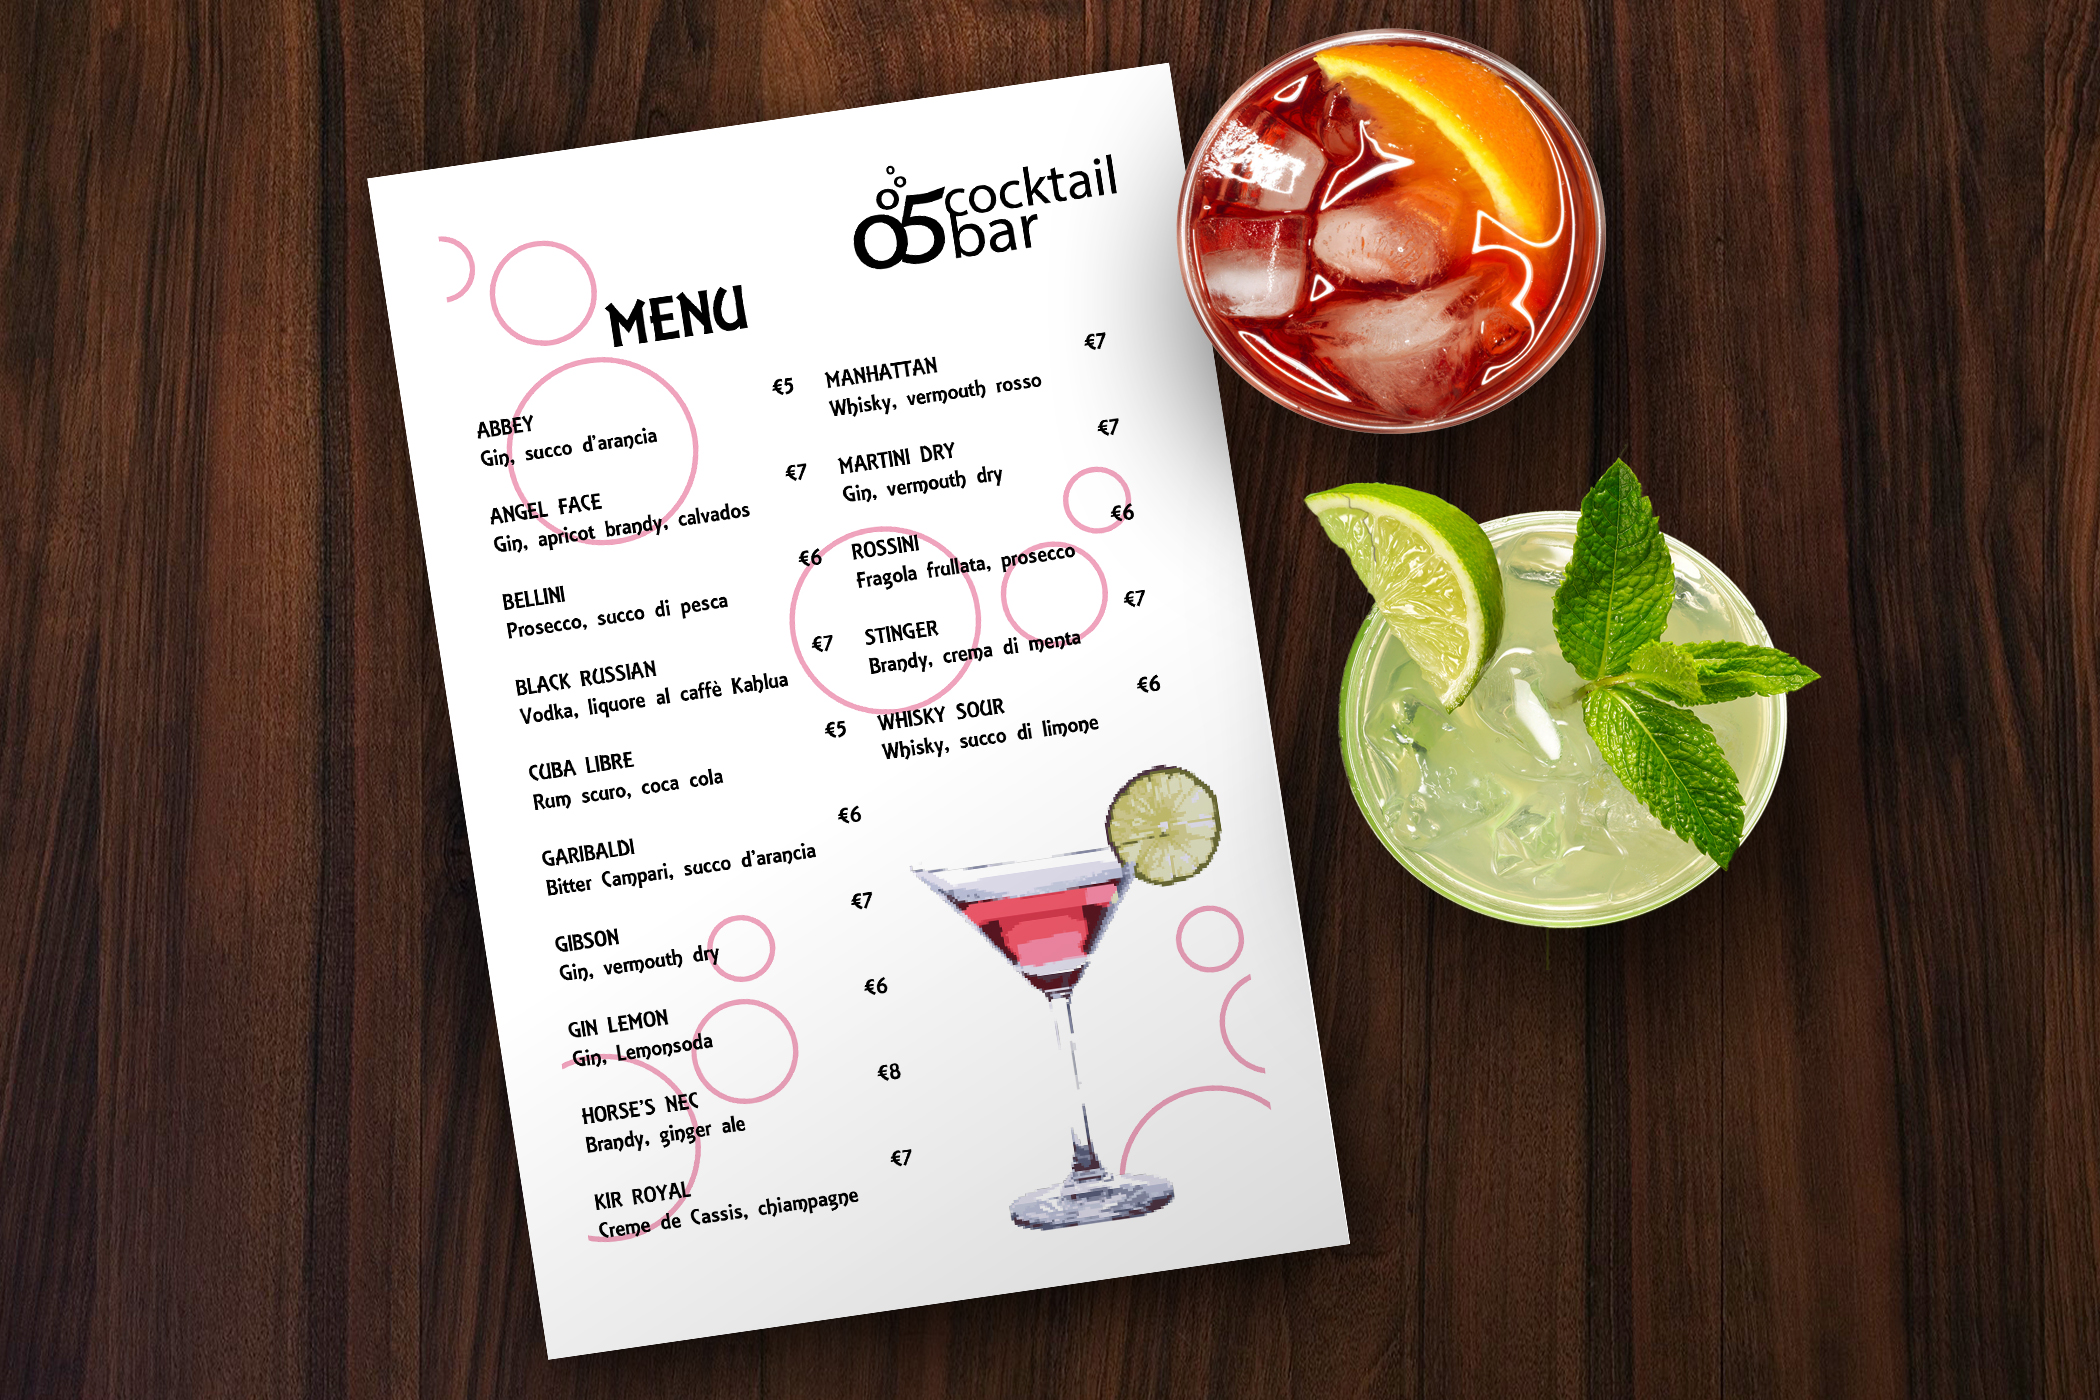 Menu 05 cocktail bar